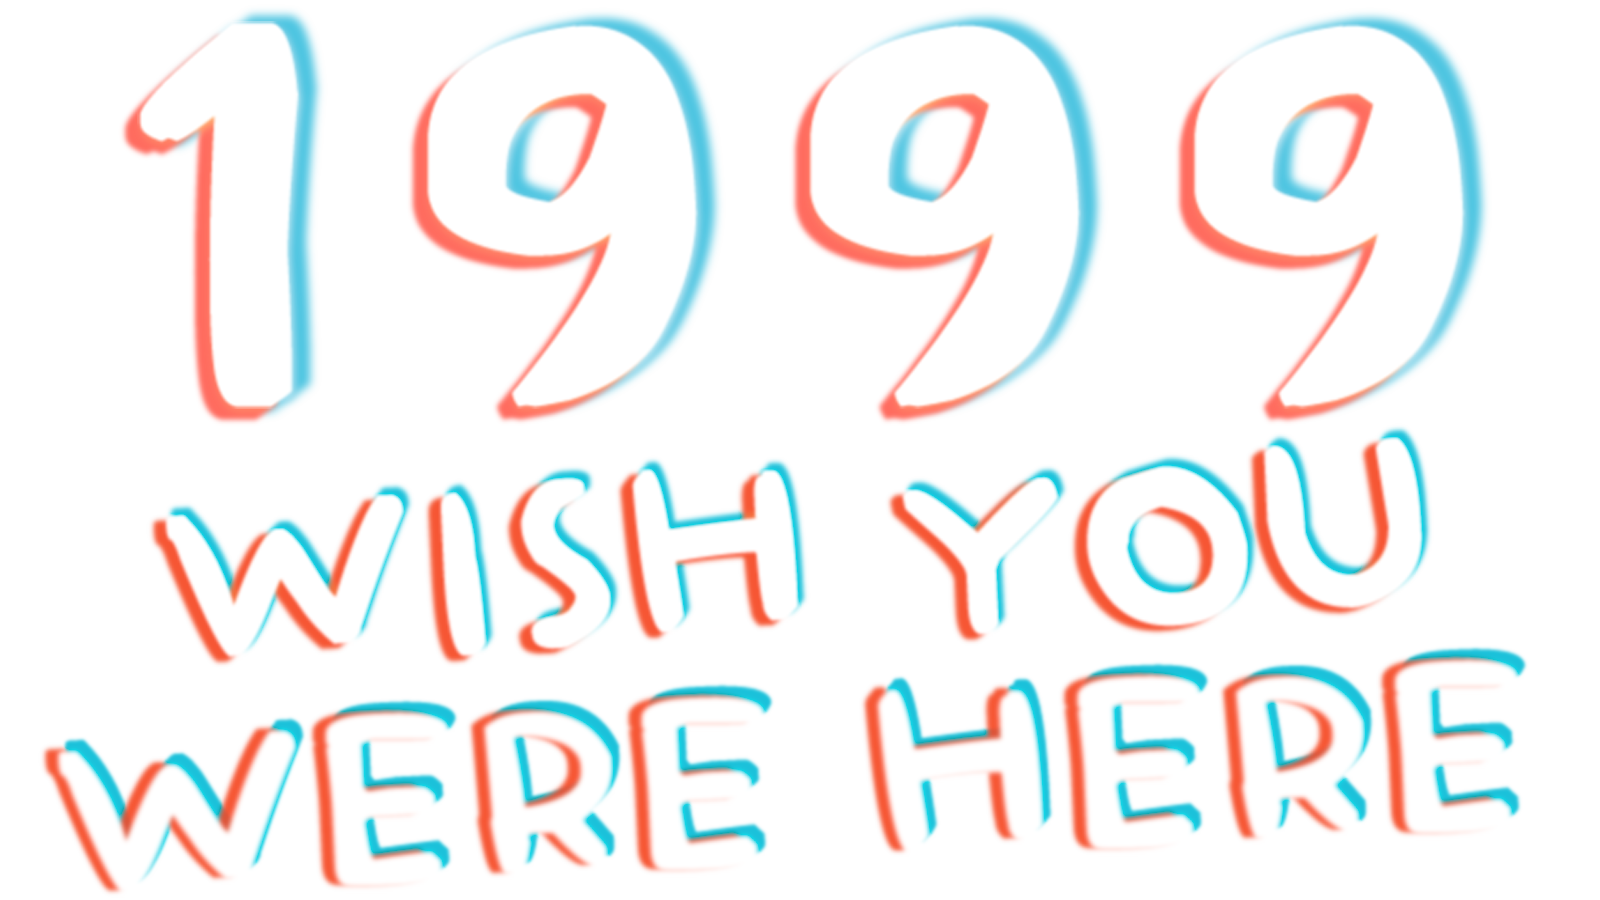 1999 : Wish You Were Here